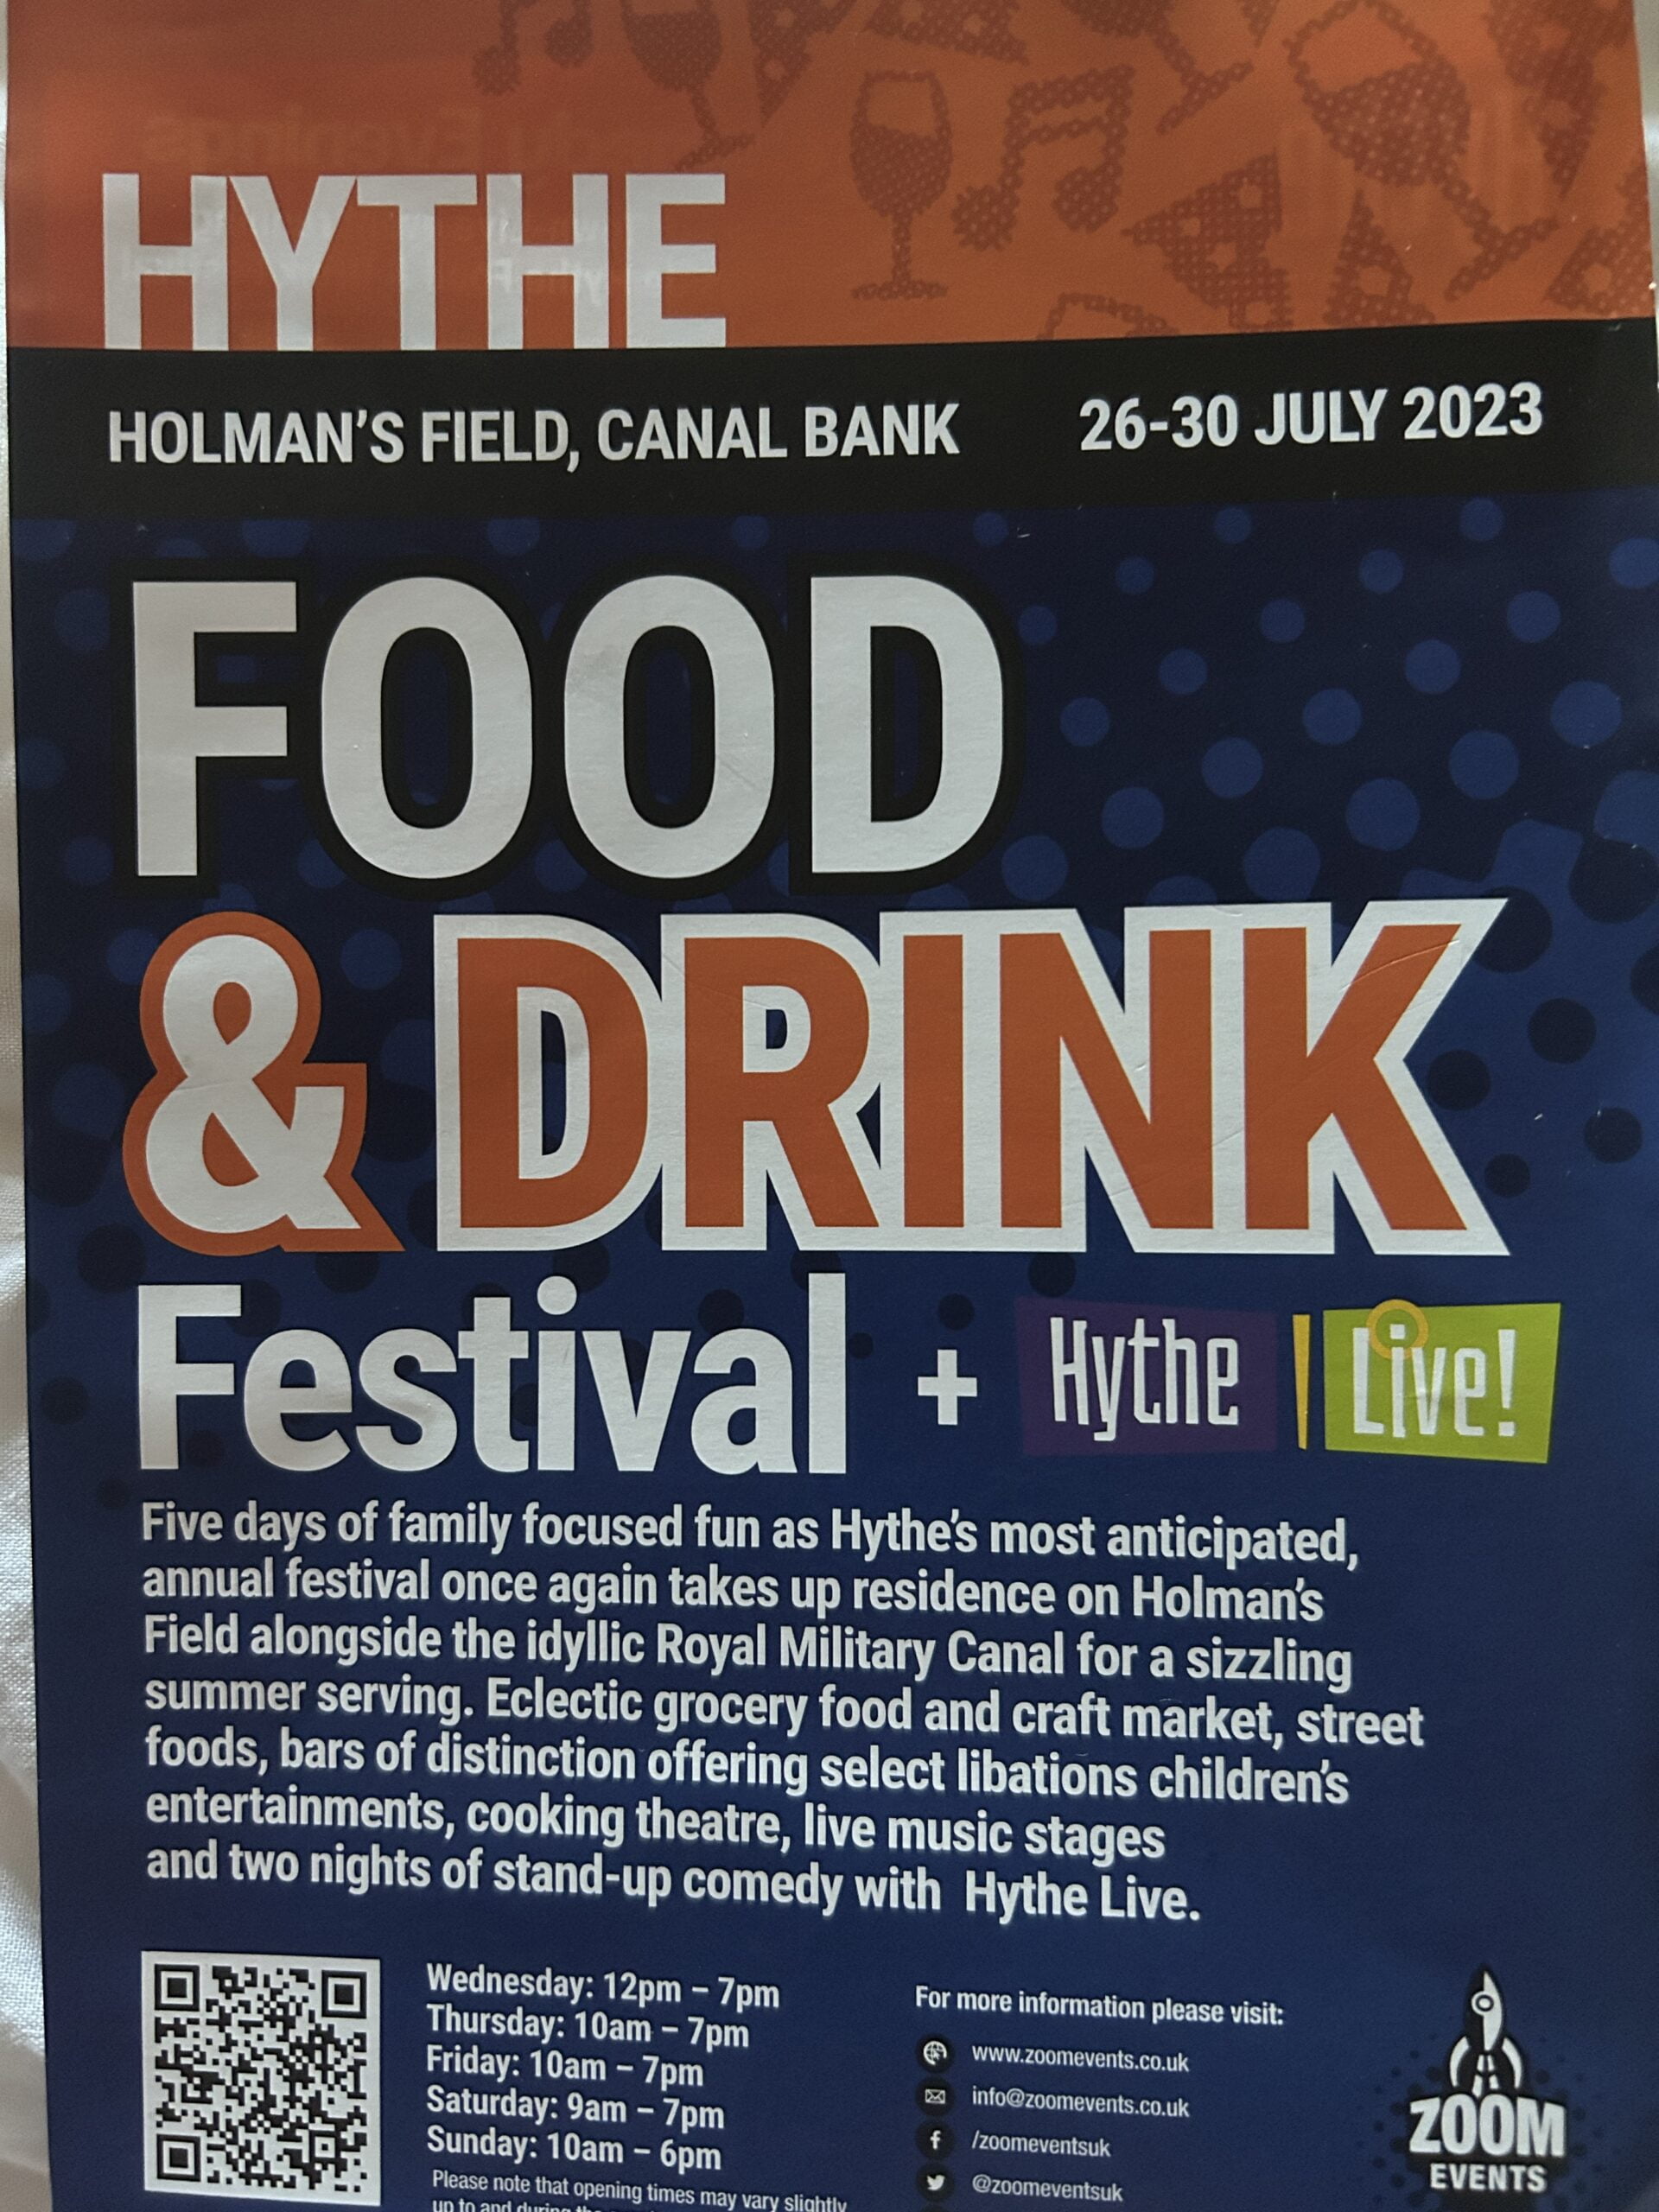 HYTHE FOOD & DRINK FESTIVAL